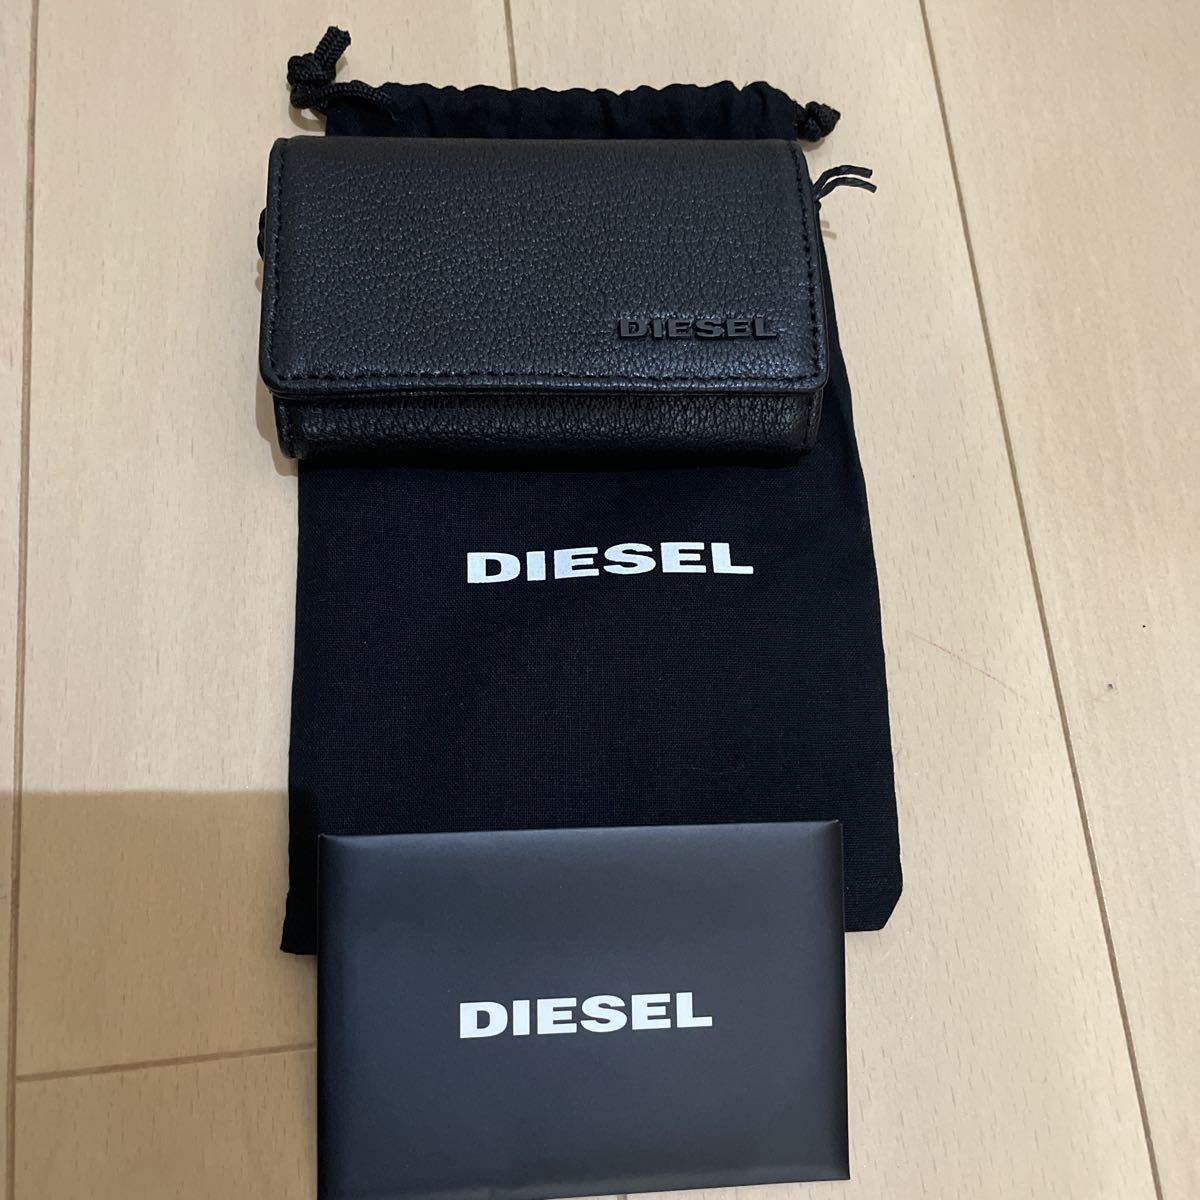  free shipping unused DIESEL diesel key case X06629 key ring attaching 6 ream black leather storage bag attaching 